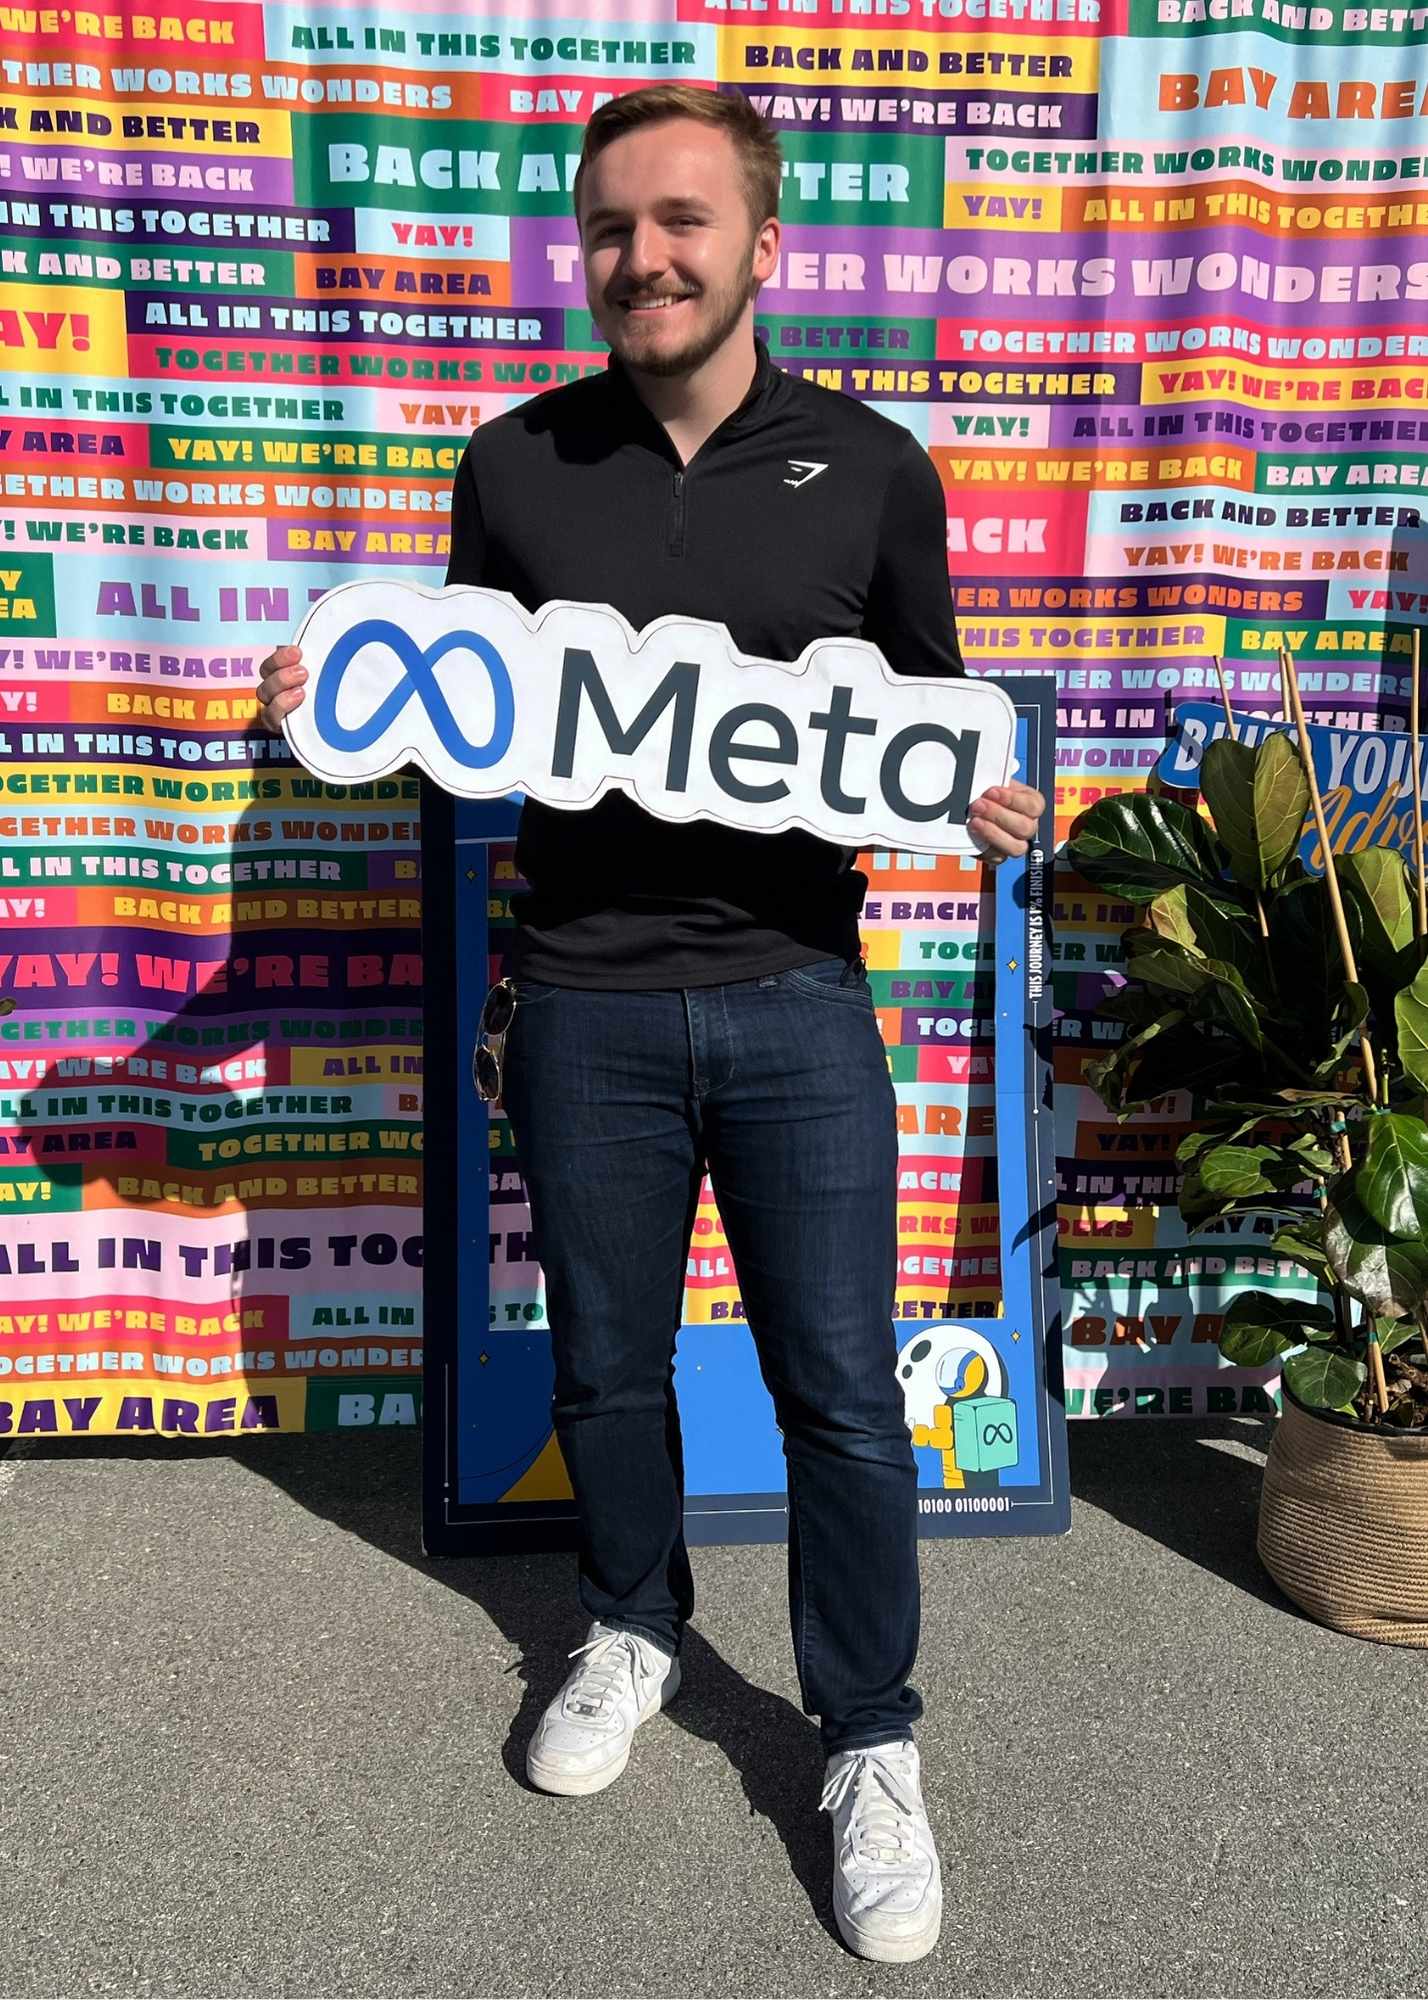 Evan Quist holding Meta sign during internship